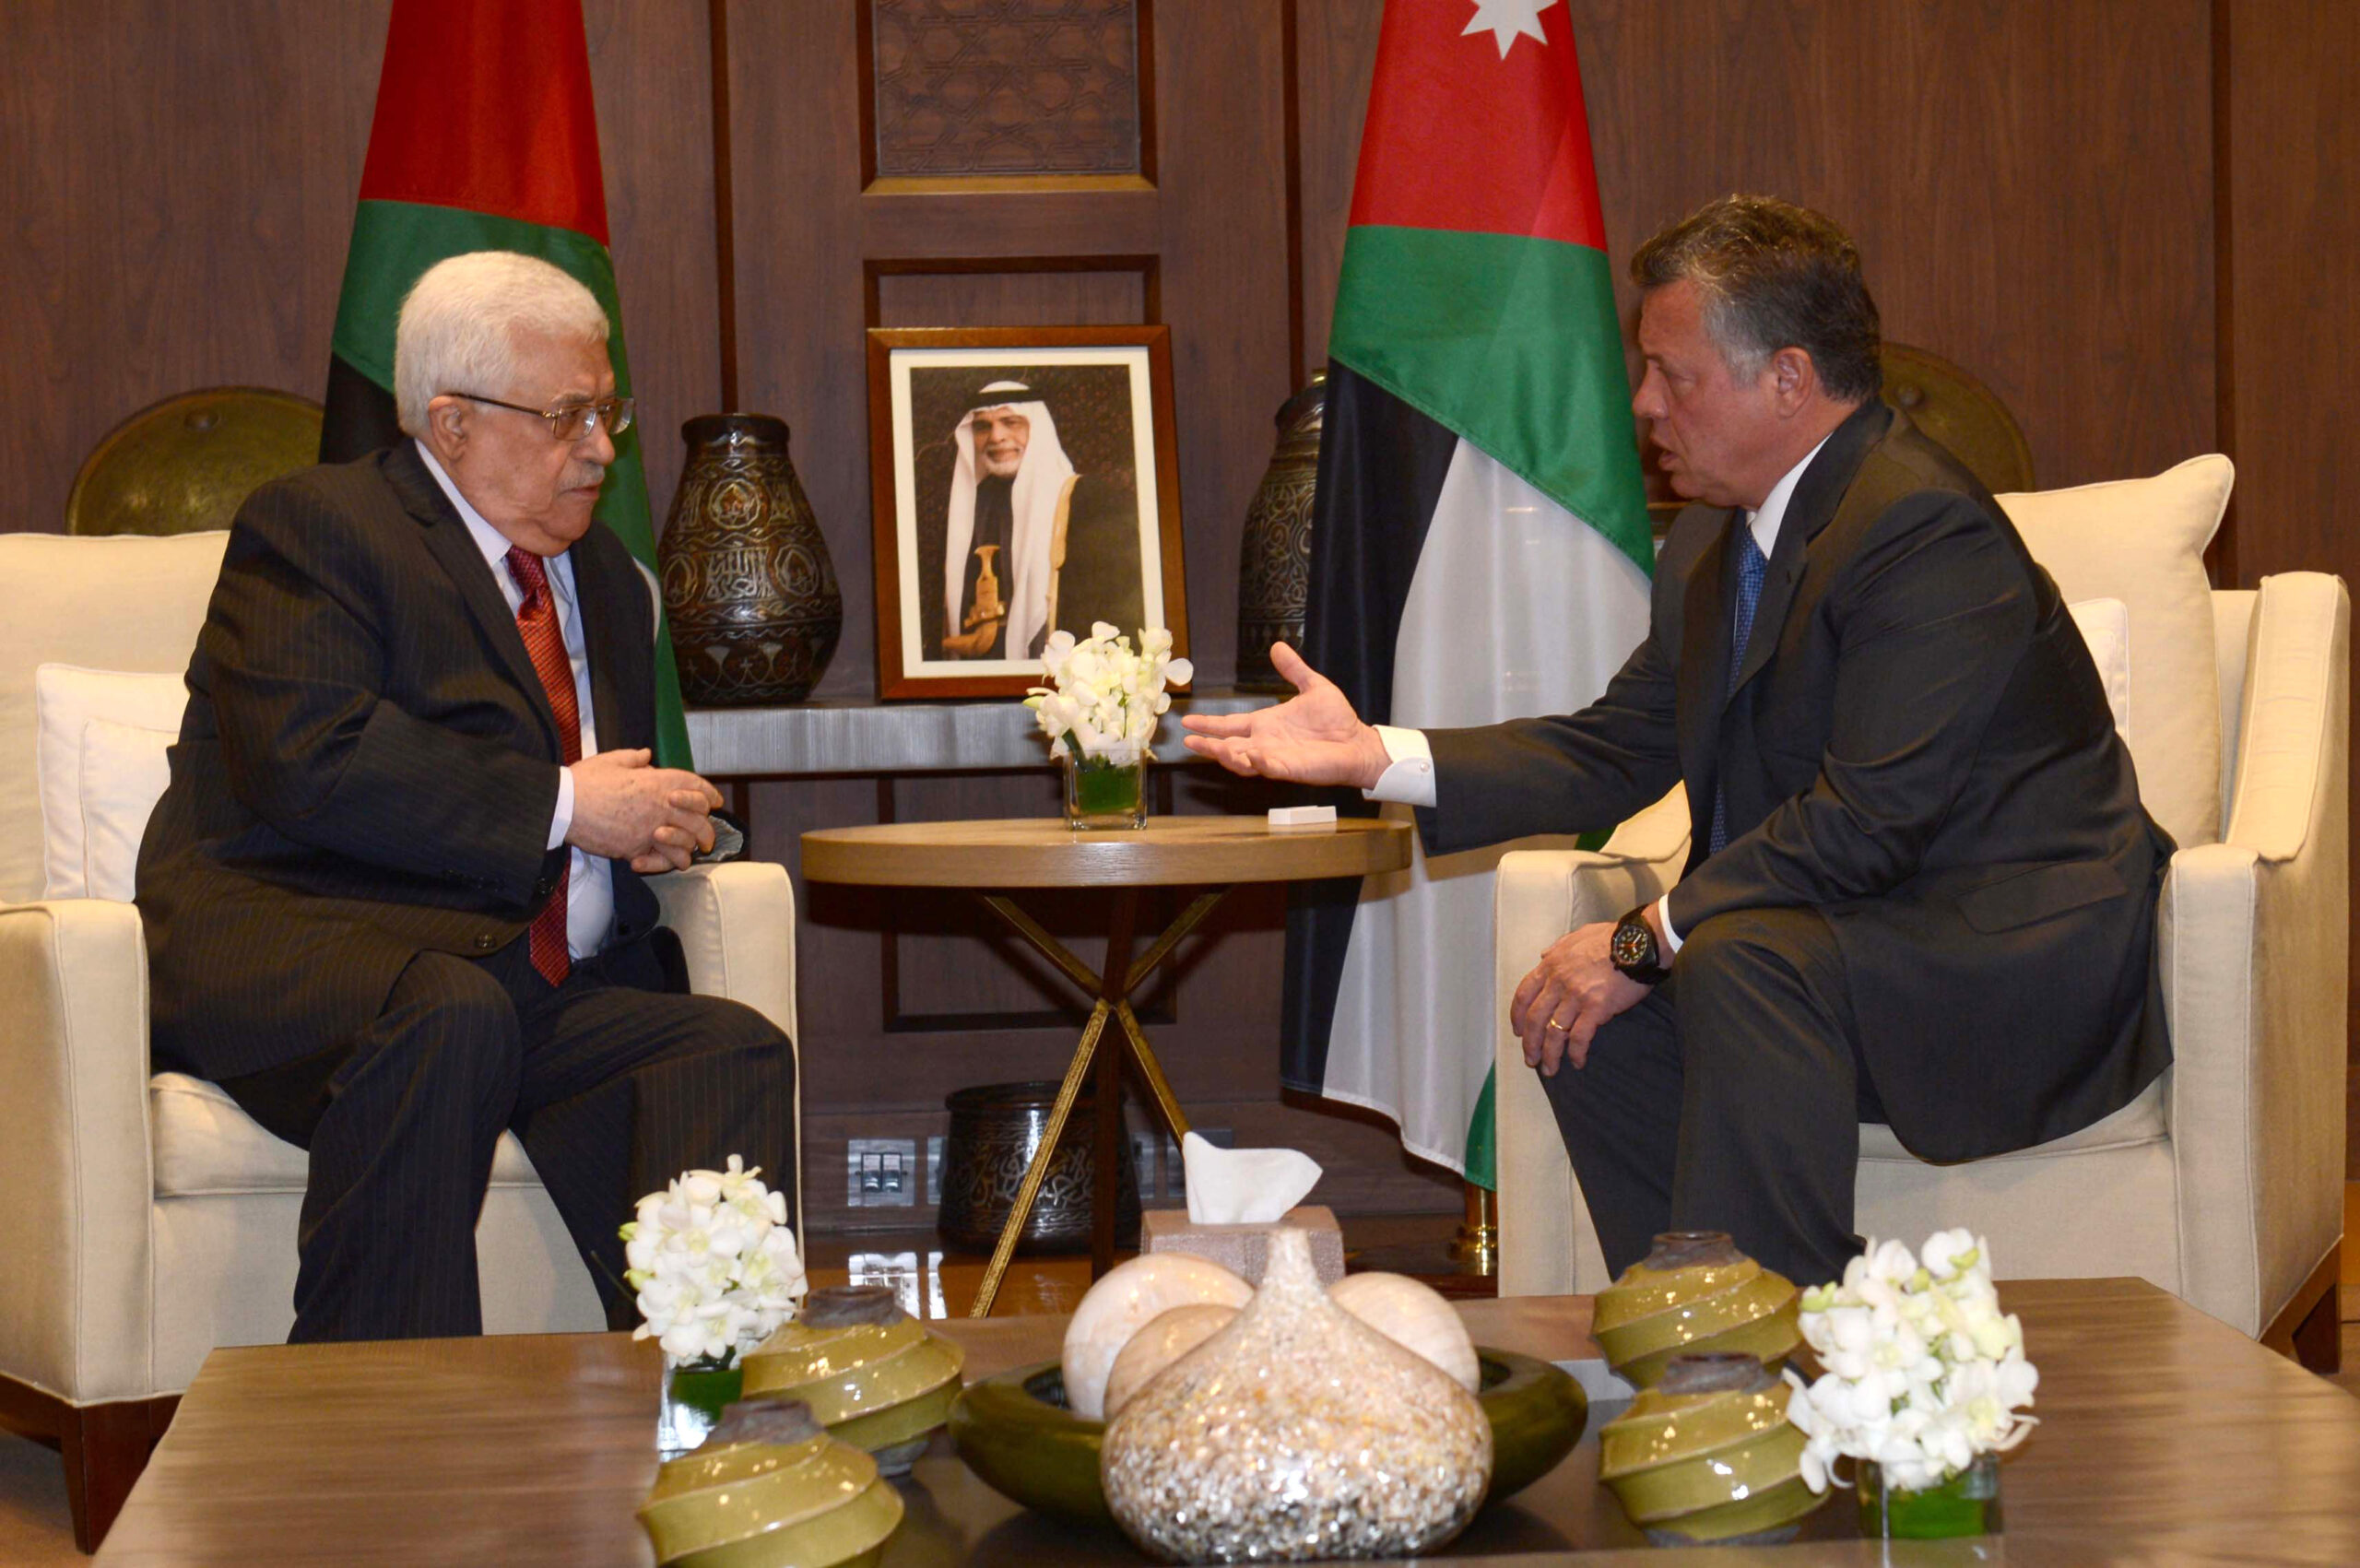 Palestinian President Mahmoud Abbas with Jordan King Abdullah II at the Royal Palace in Amman,Jordan / ZUMA Press, Inc. / Alamy Stock Photo